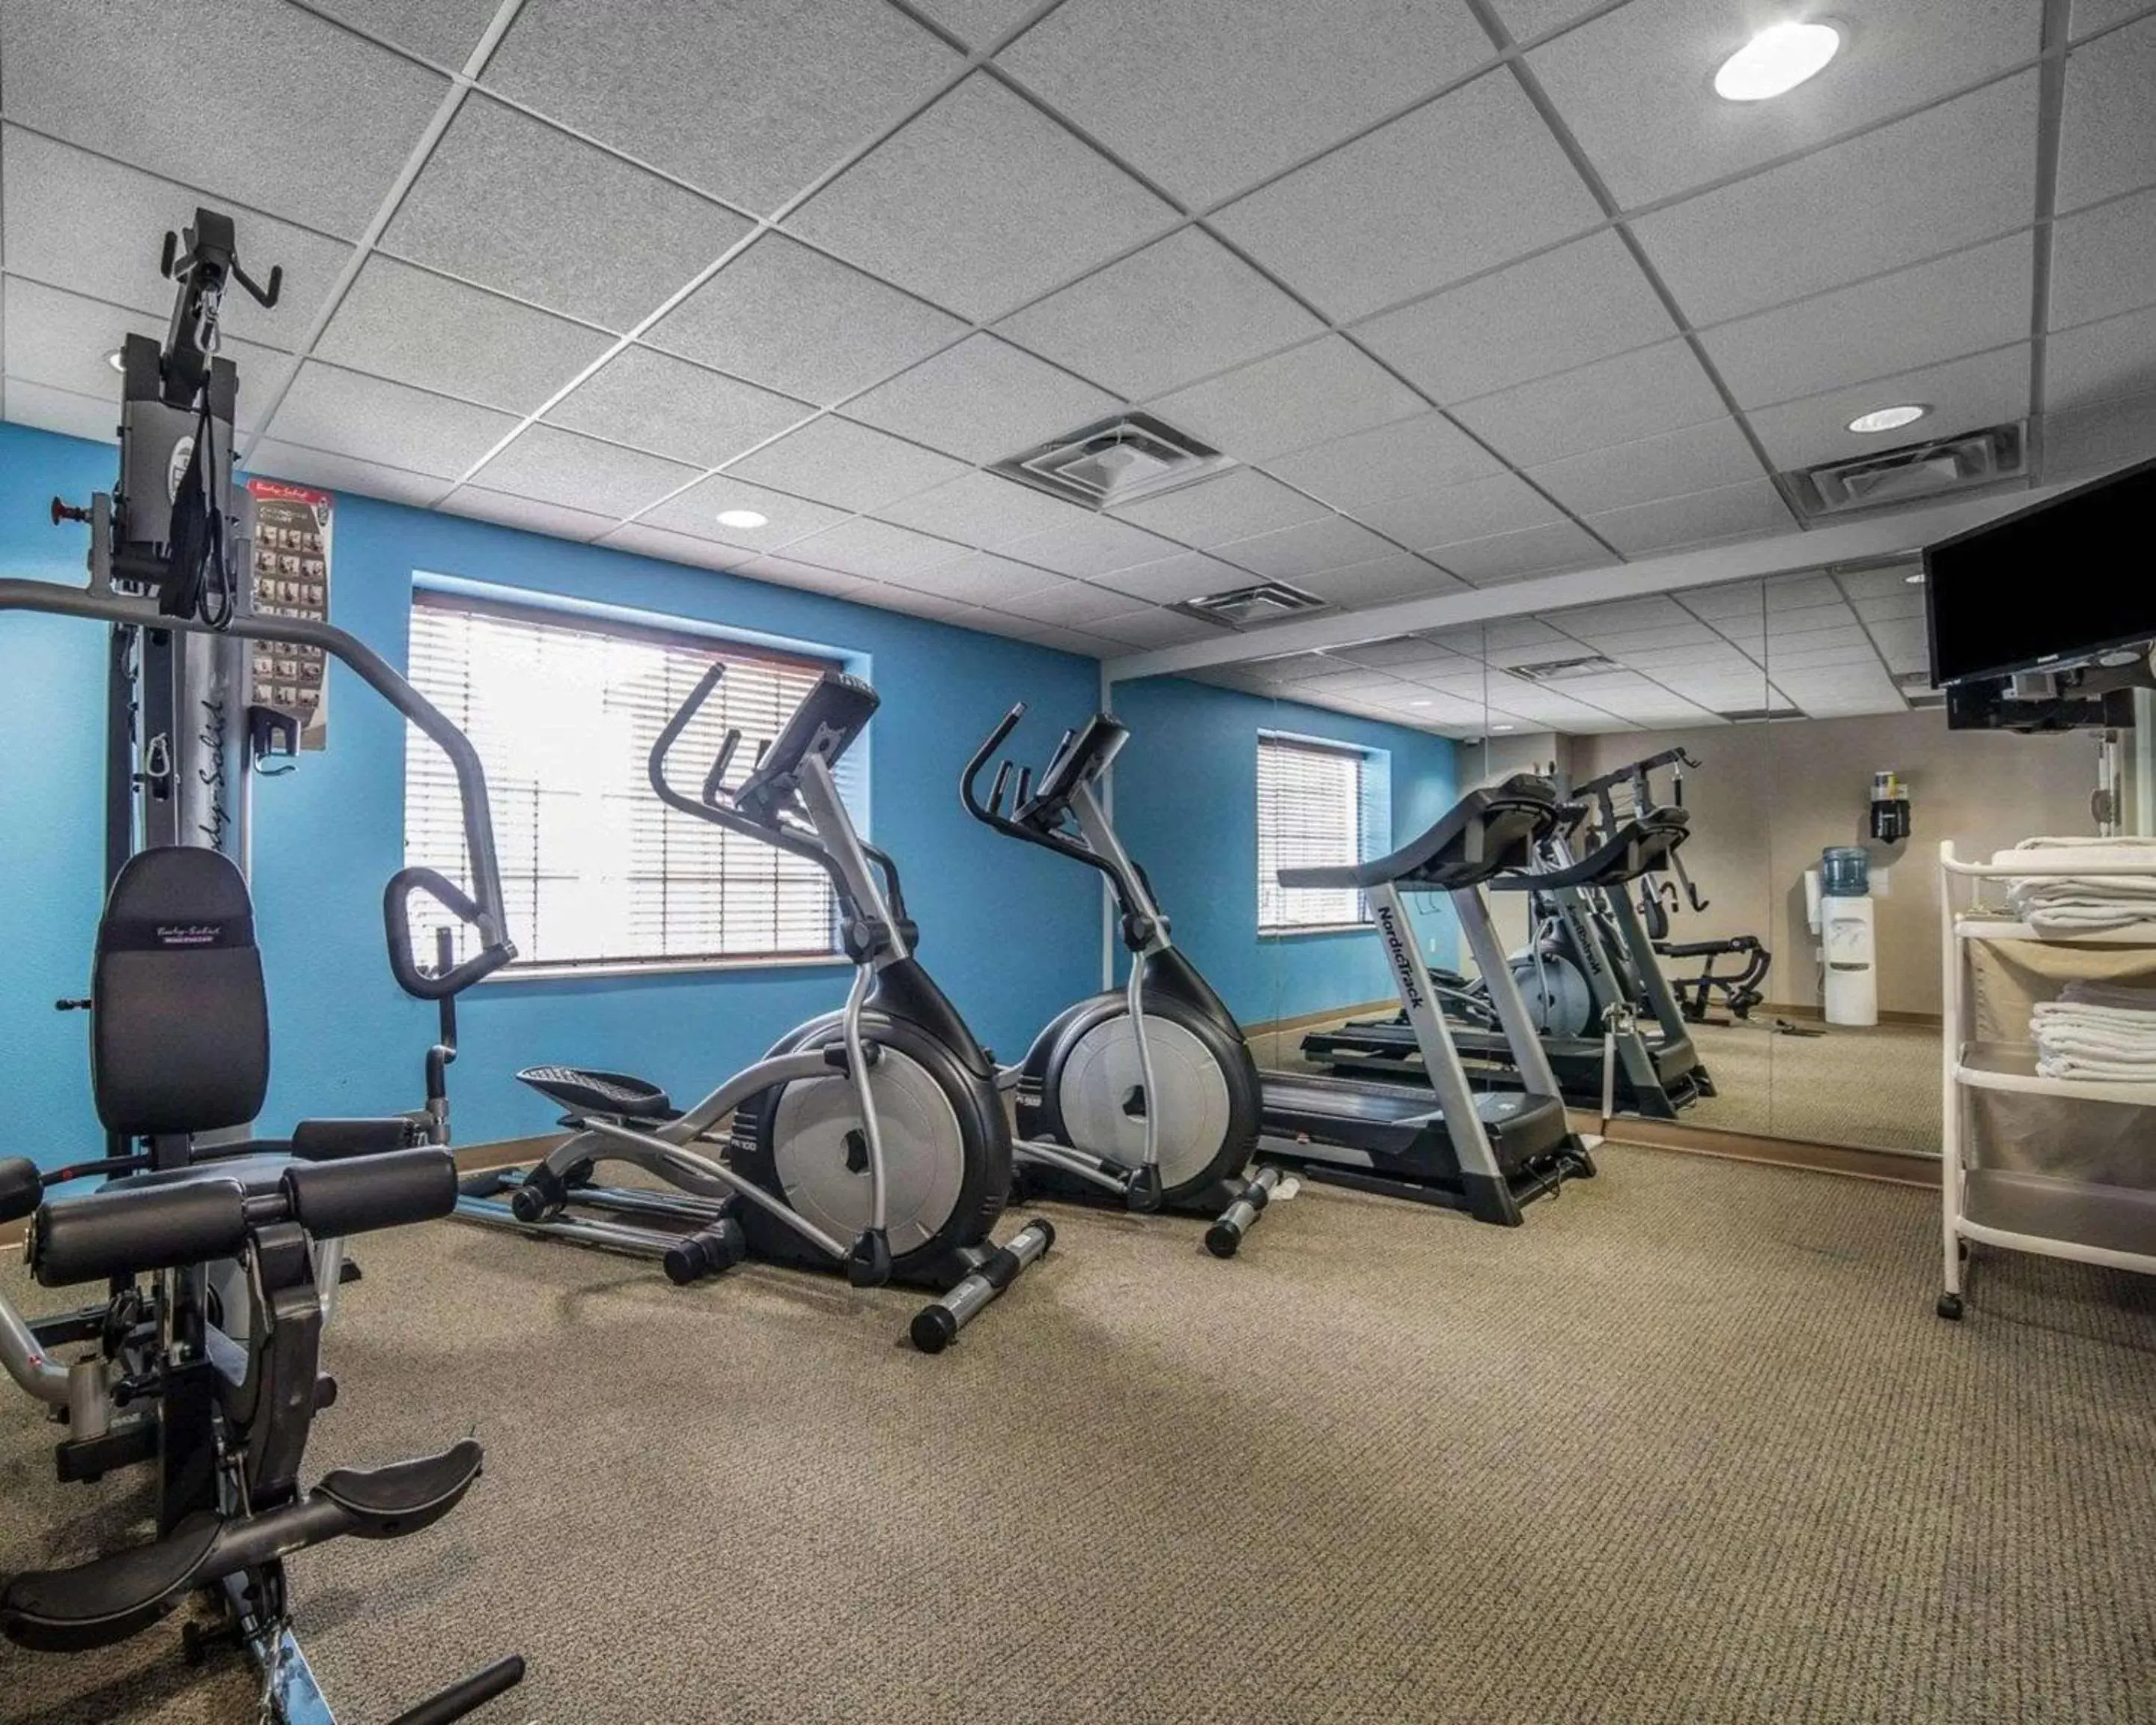 Fitness centre/facilities, Fitness Center/Facilities in MainStay Suites Casper